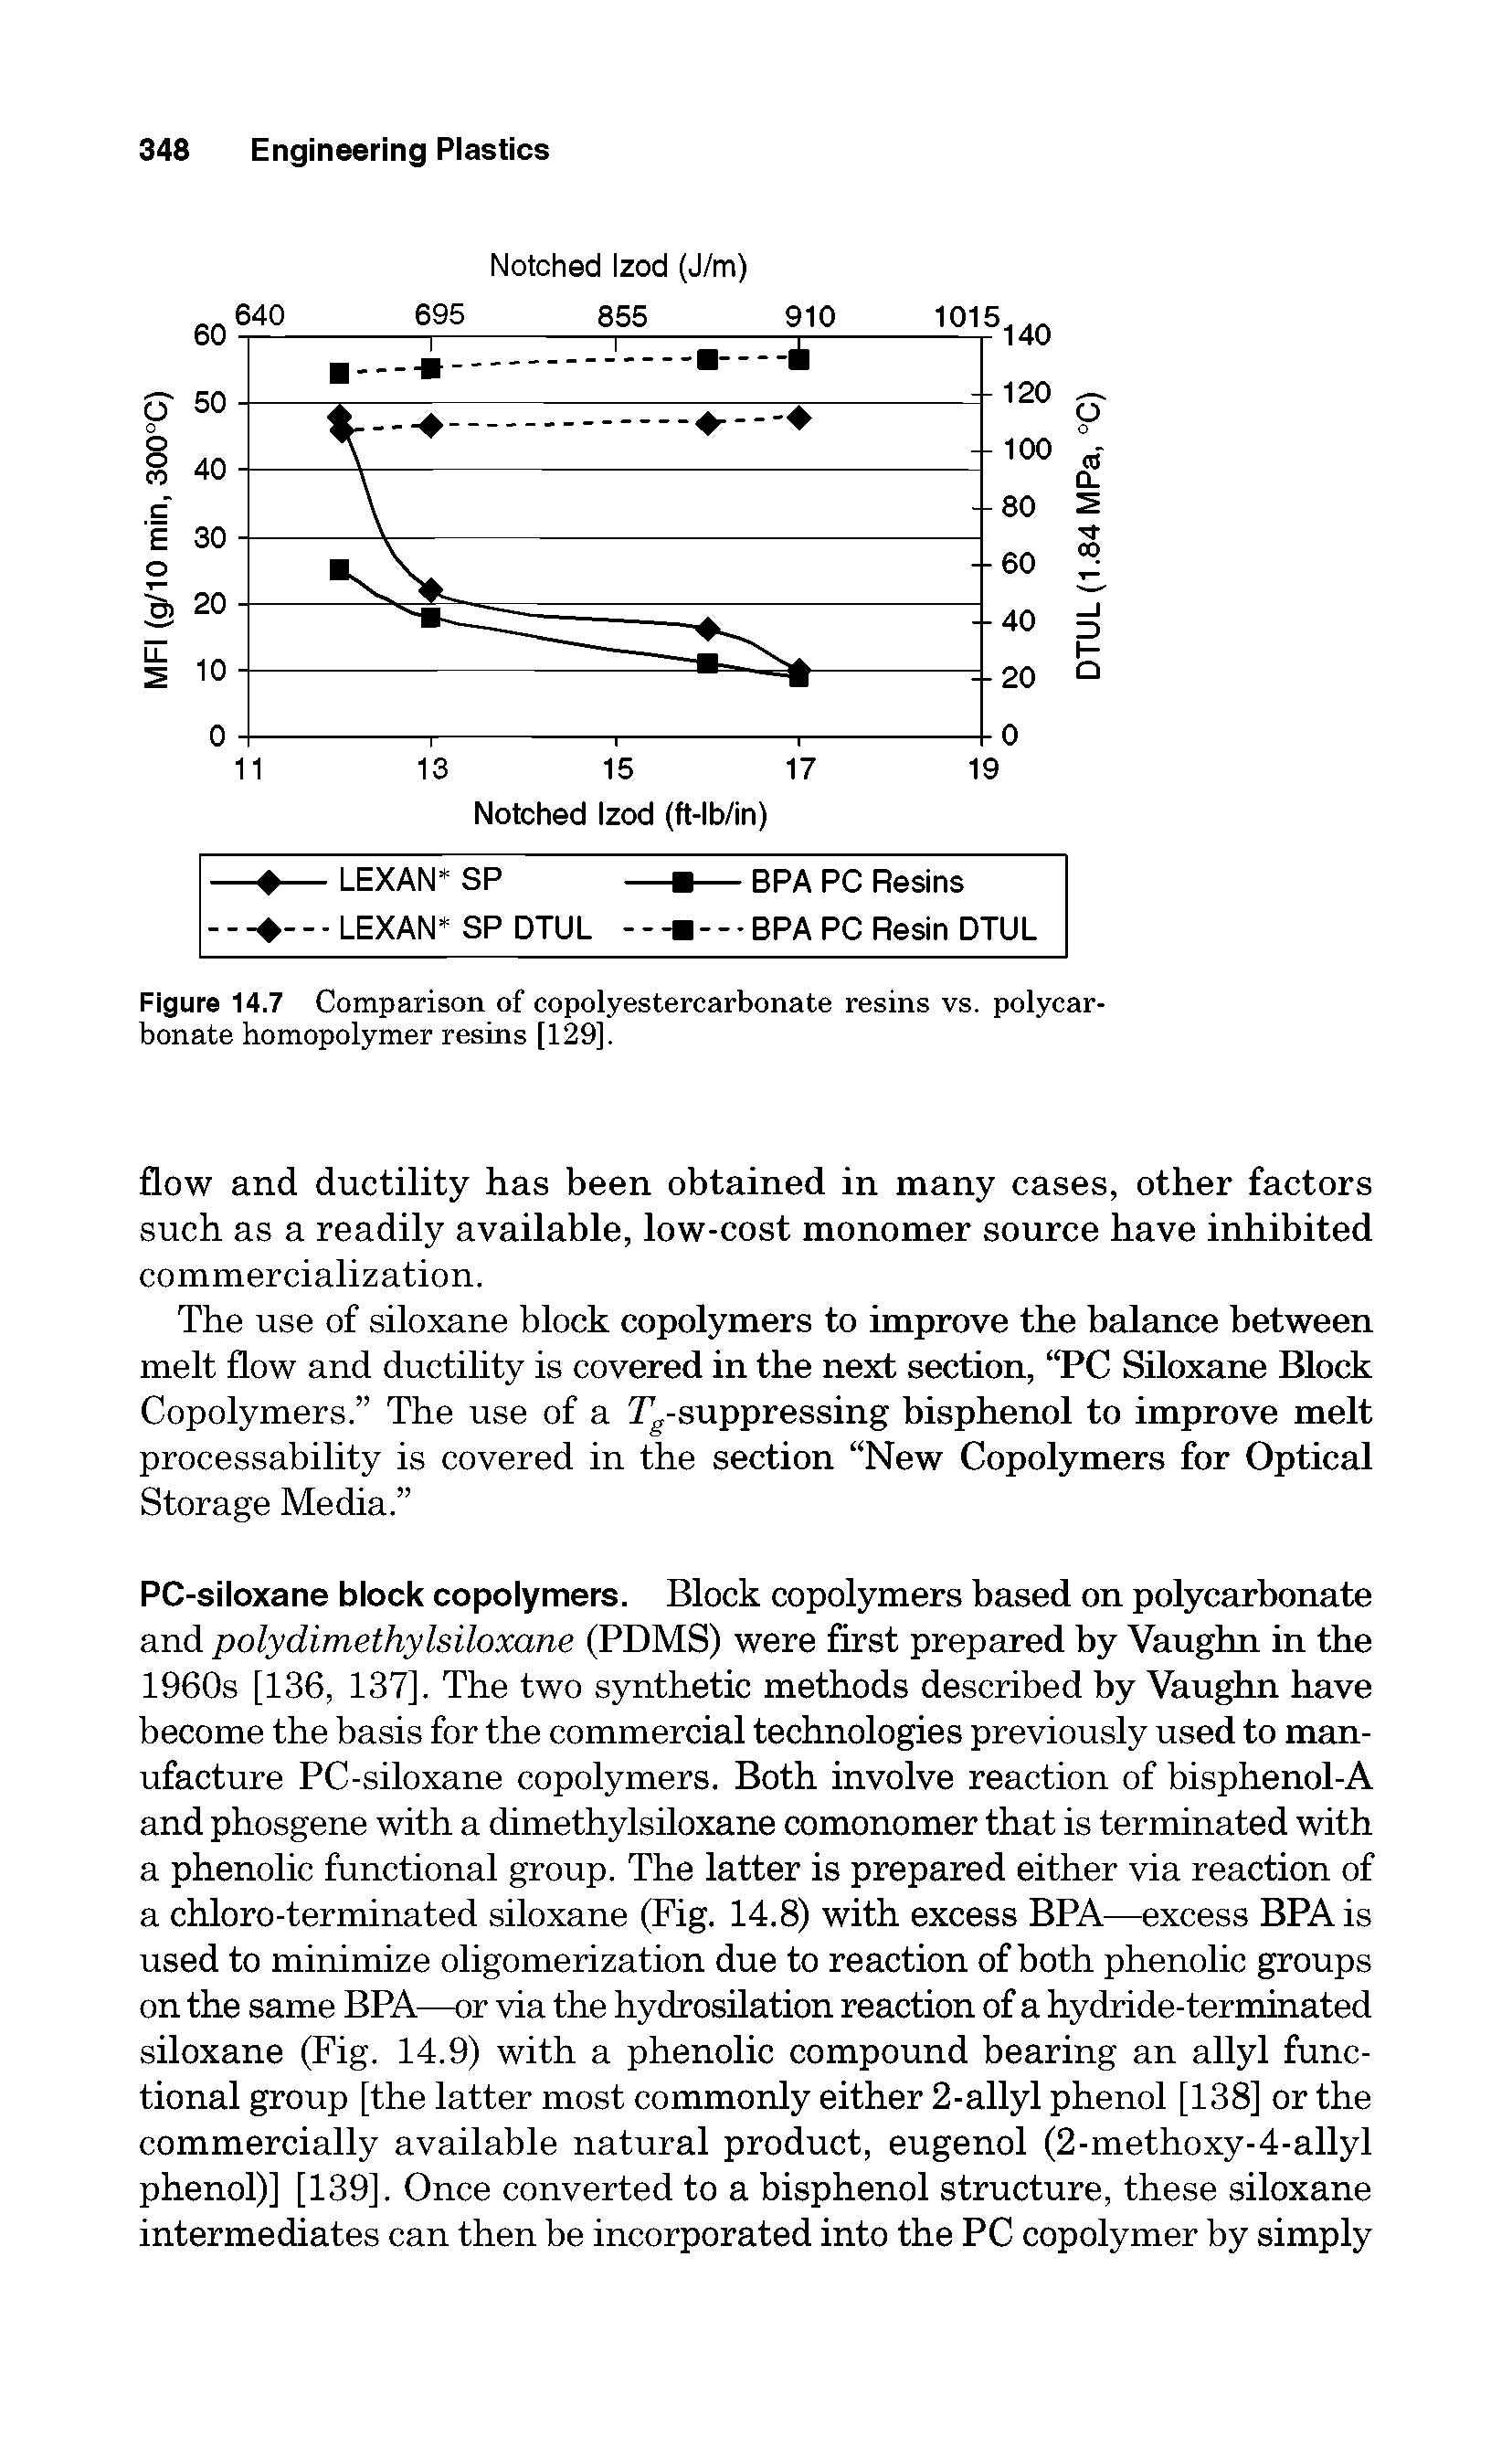 Figure 14.7 Comparison of copolyestercarbonate resins vs. polycarbonate homopolymer resins [129].